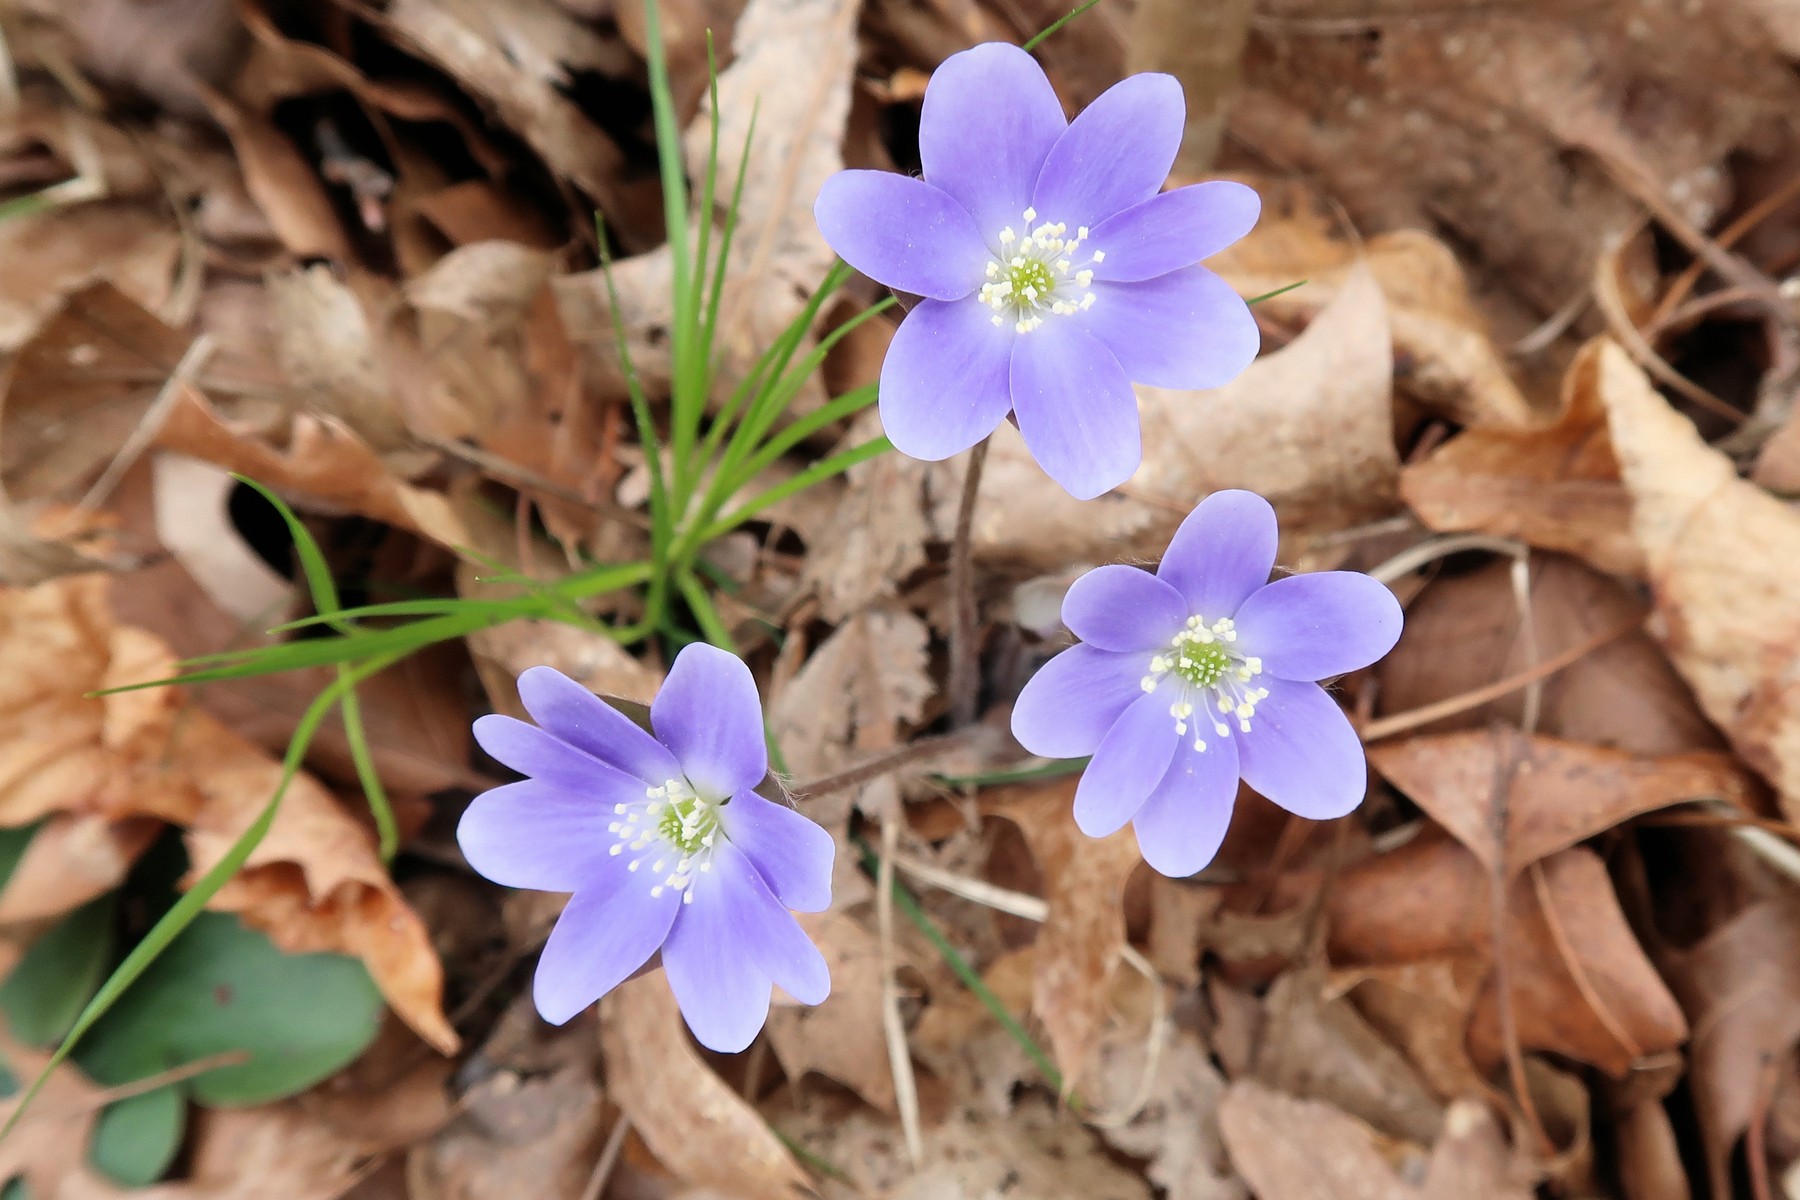 202305061416009 Hepatica (Hepatica nobilis) blue flowers - Bald Mountain RA, Oakland Co, MI.JPG